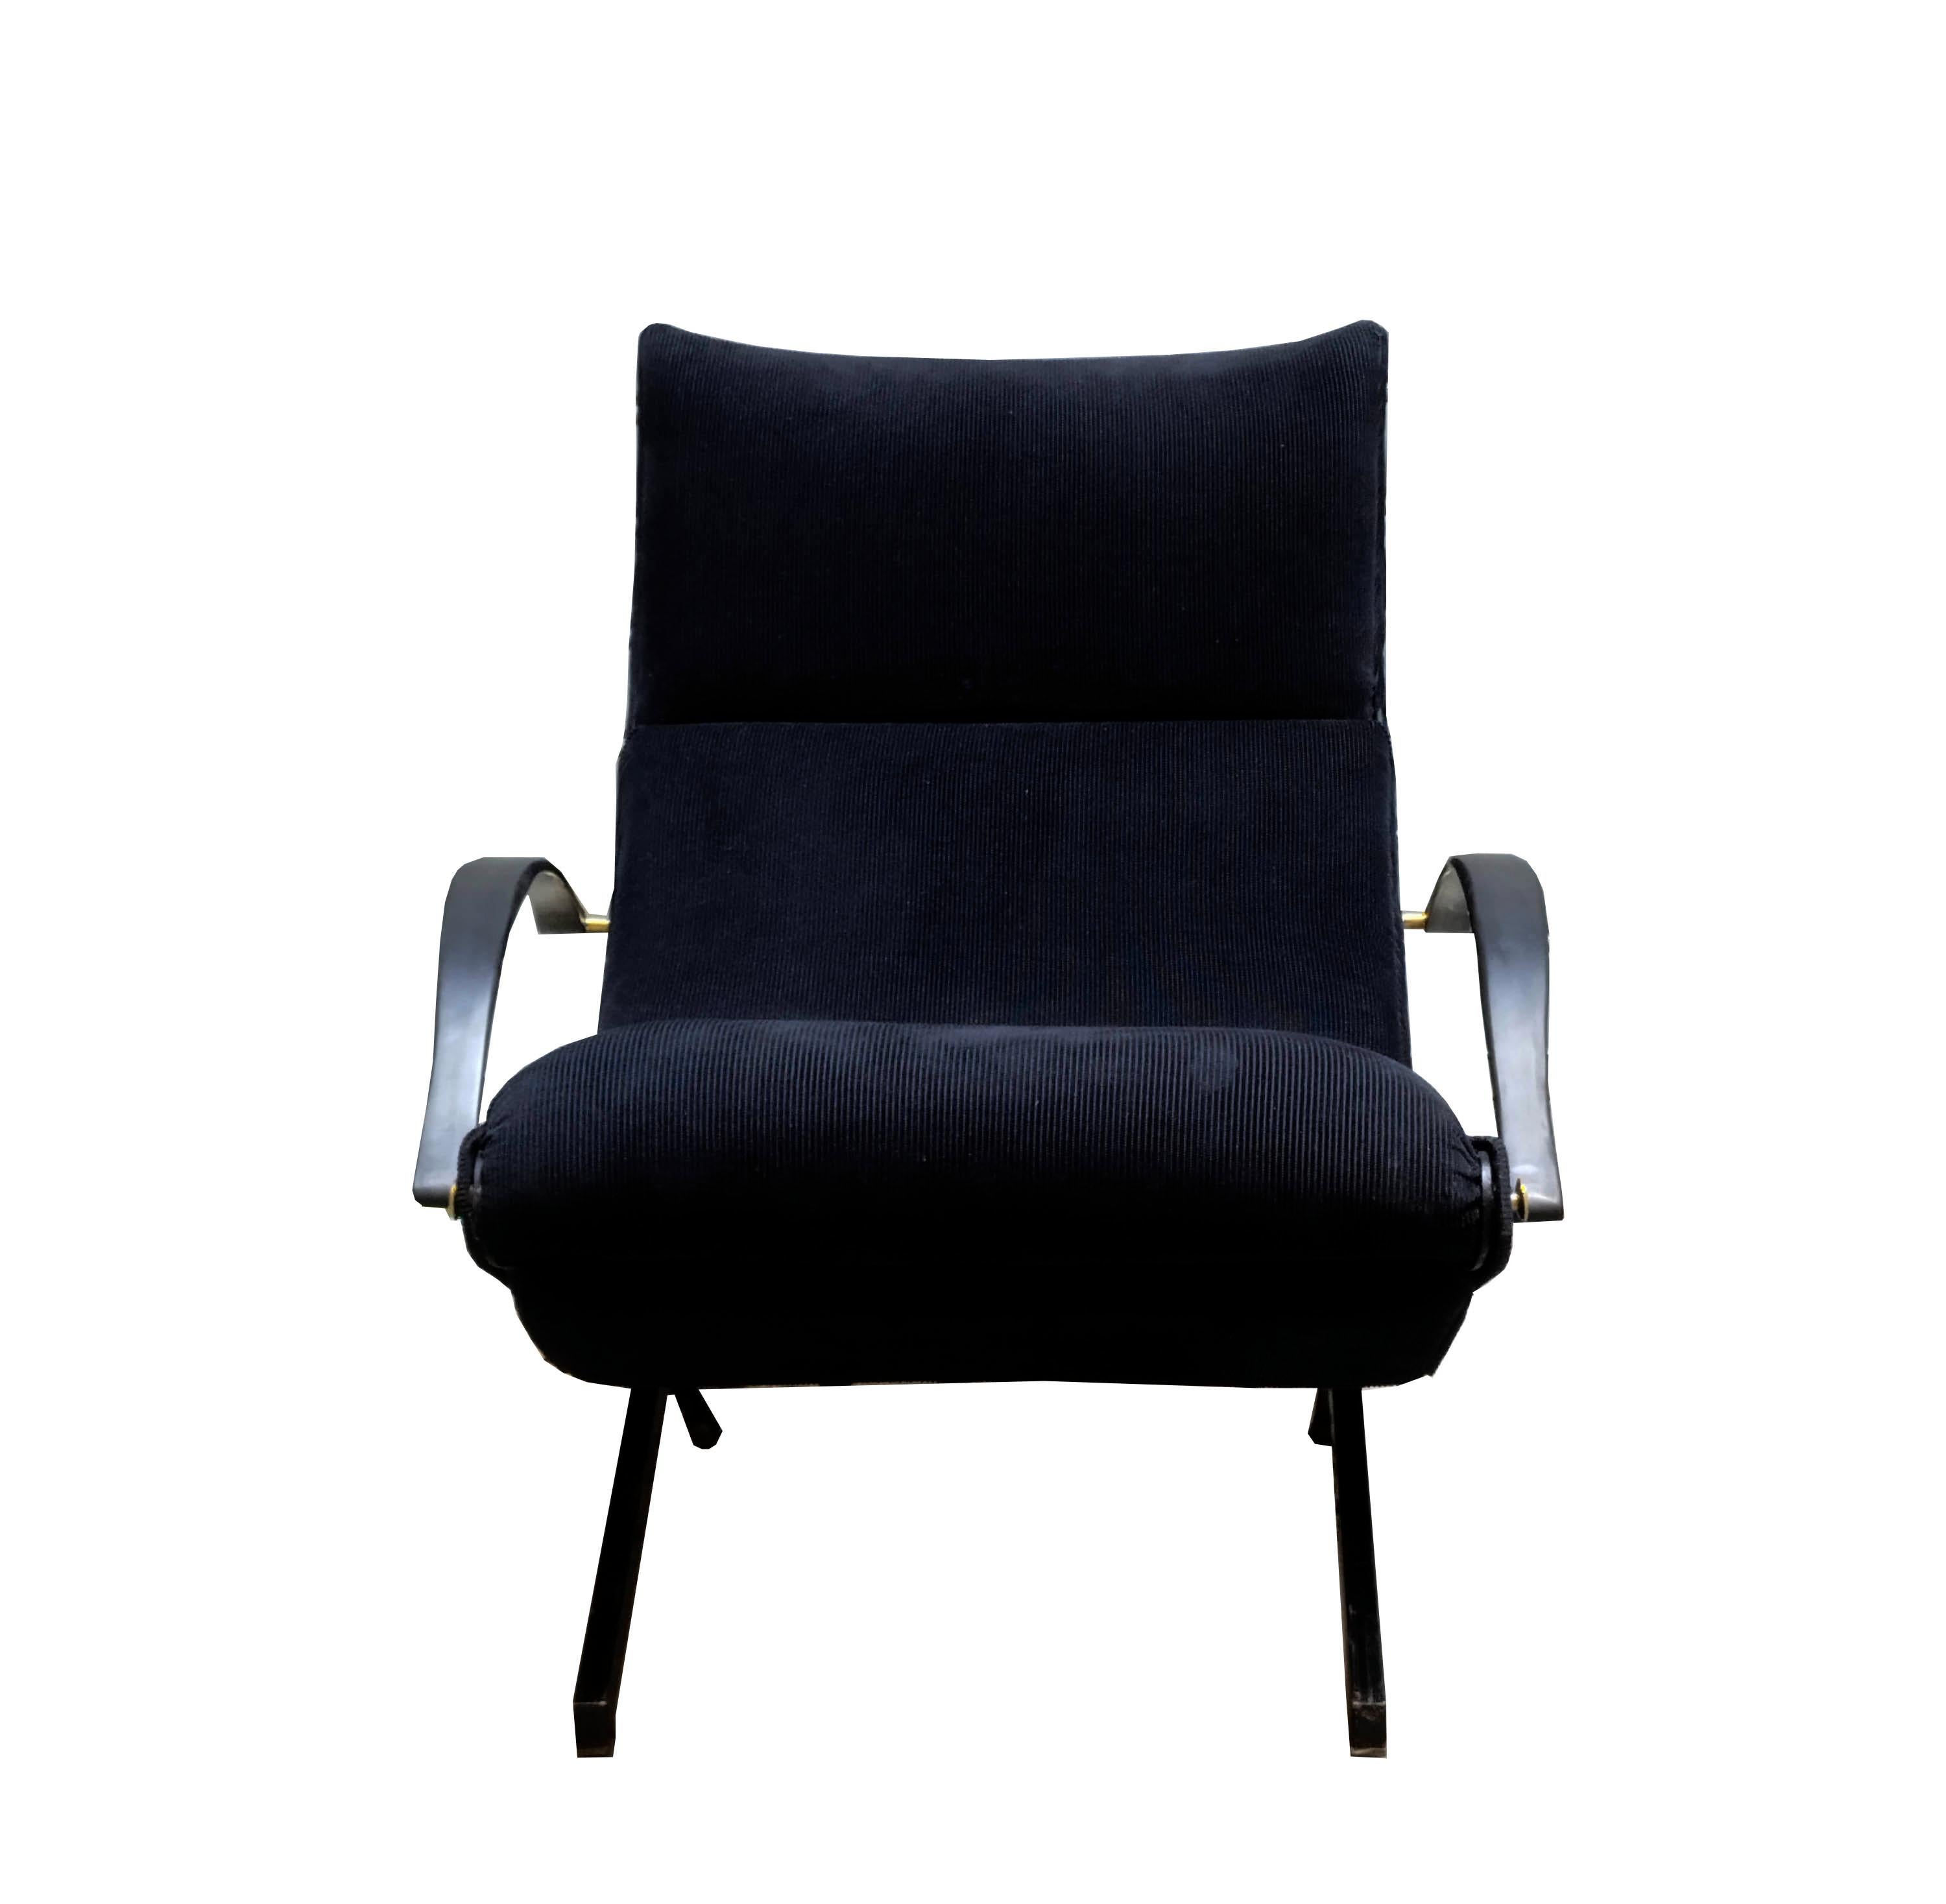 Mid-20th Century Osvaldo Borsani for Tecno ‘P40' Lounge Chair, Italy, 1955